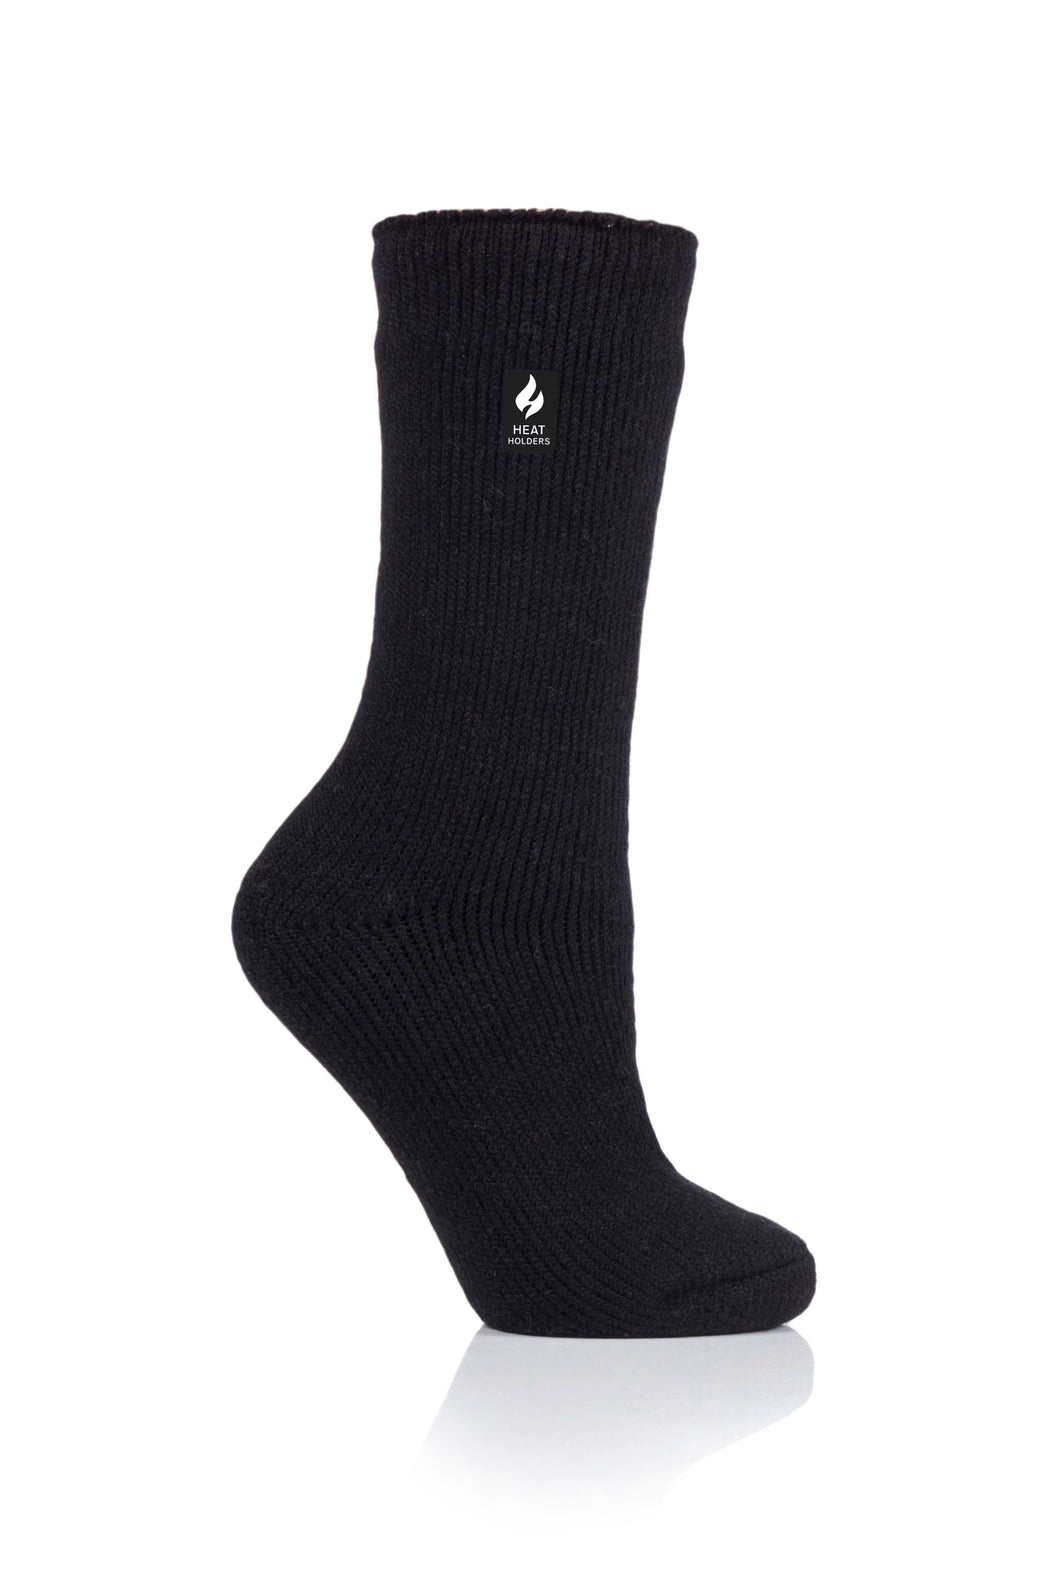 Women's 2.3 Tog Original Thermal Socks - Heat Holders